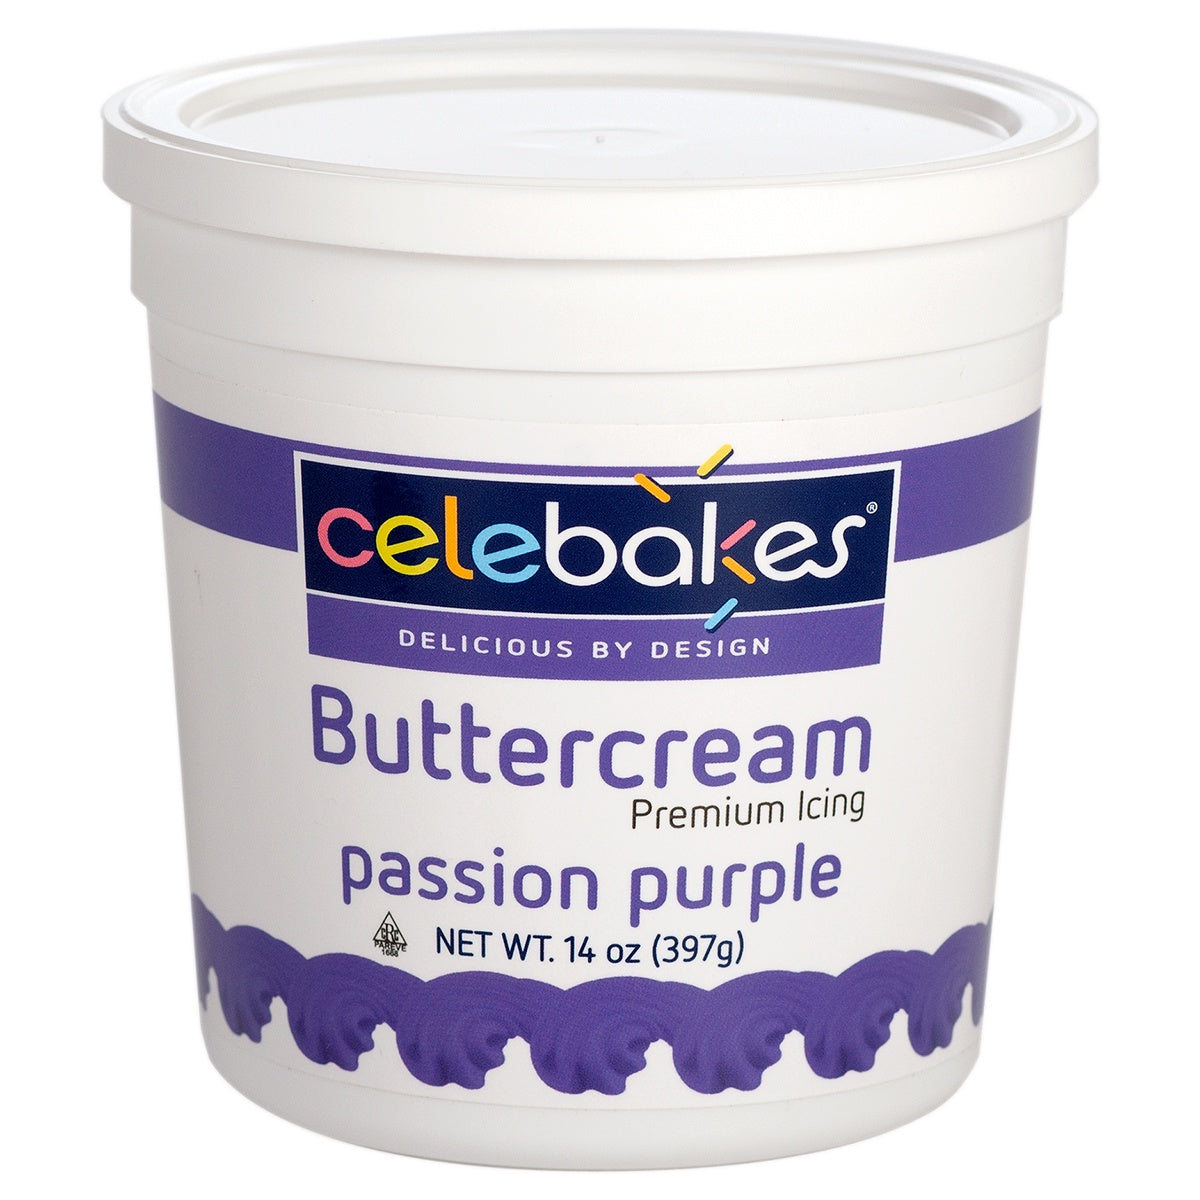 14oz Passion Purple Buttercream, Celebakes